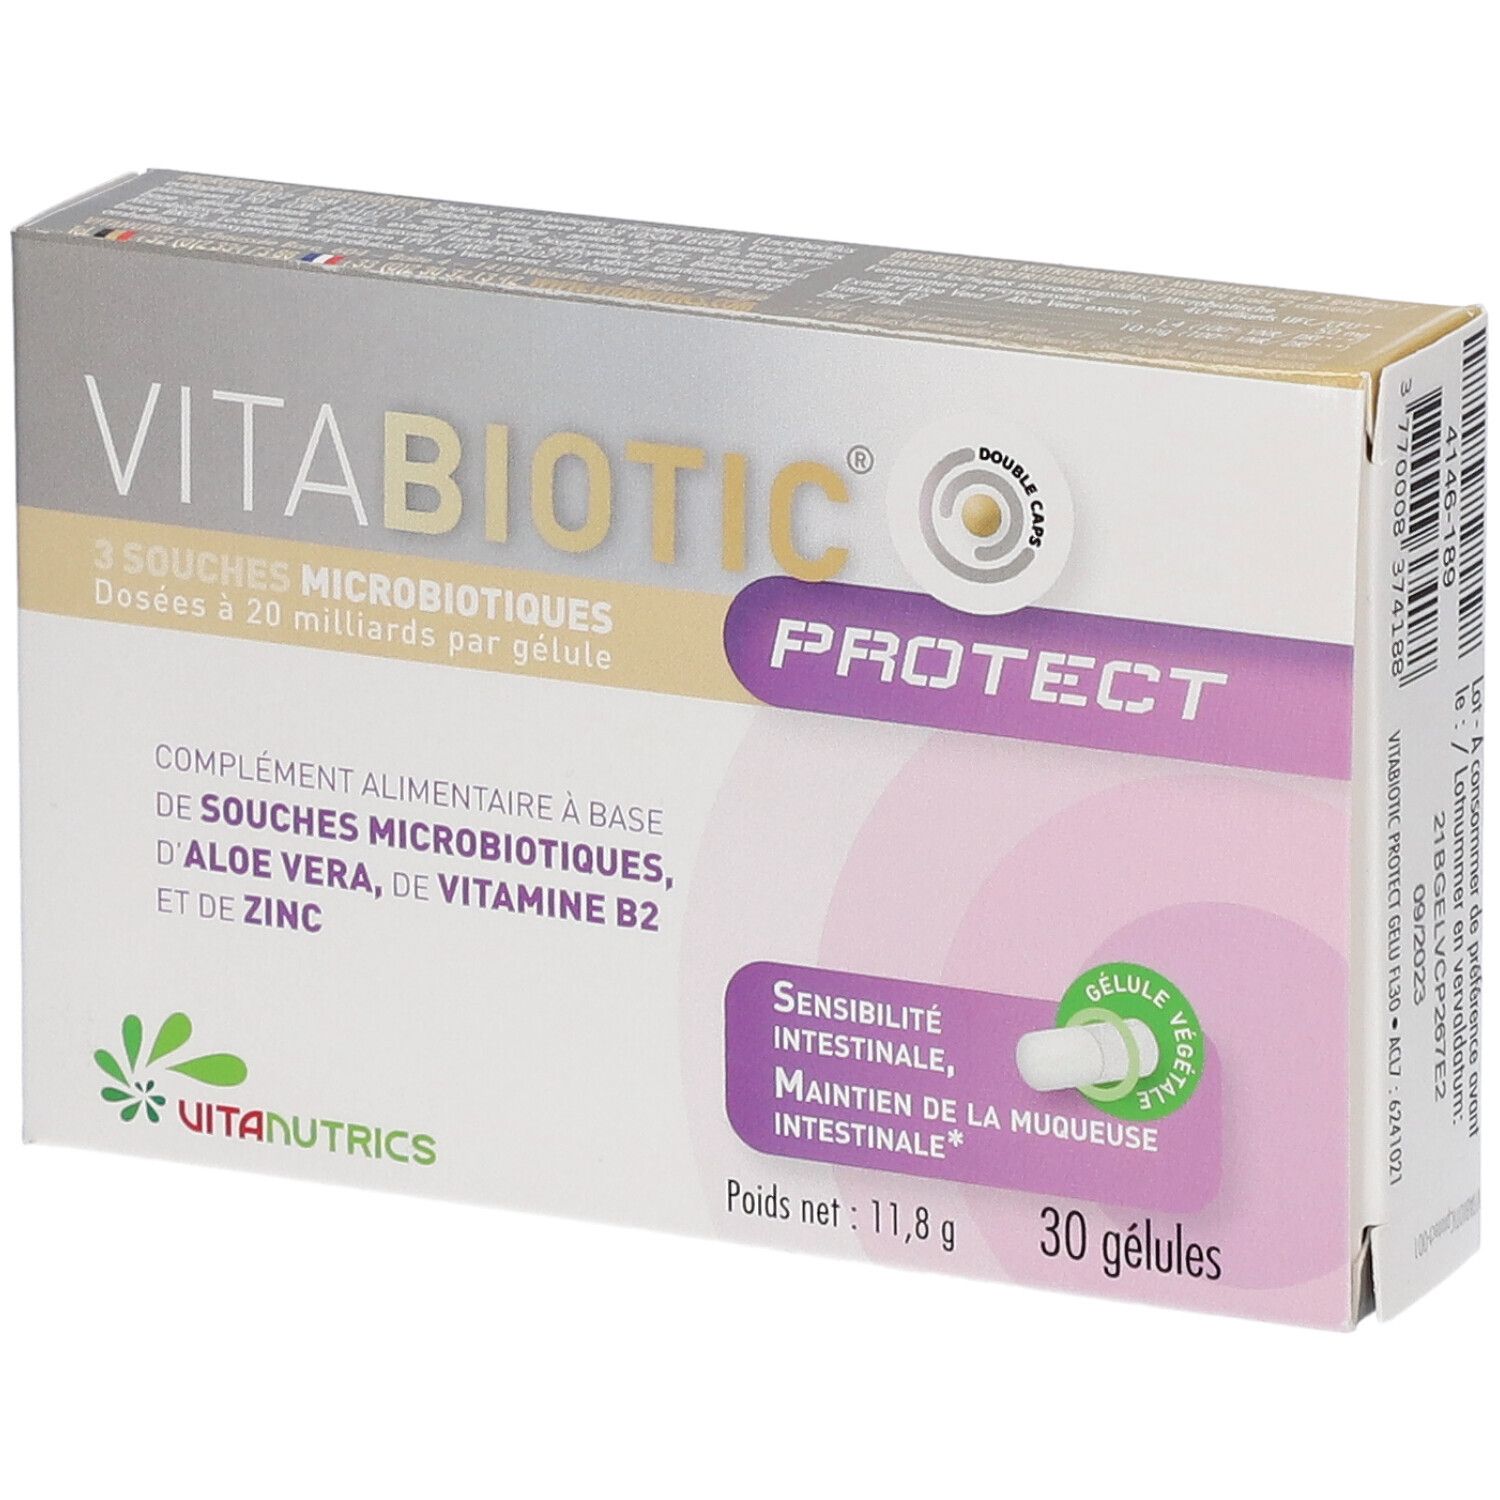 Vitabiotic Protect